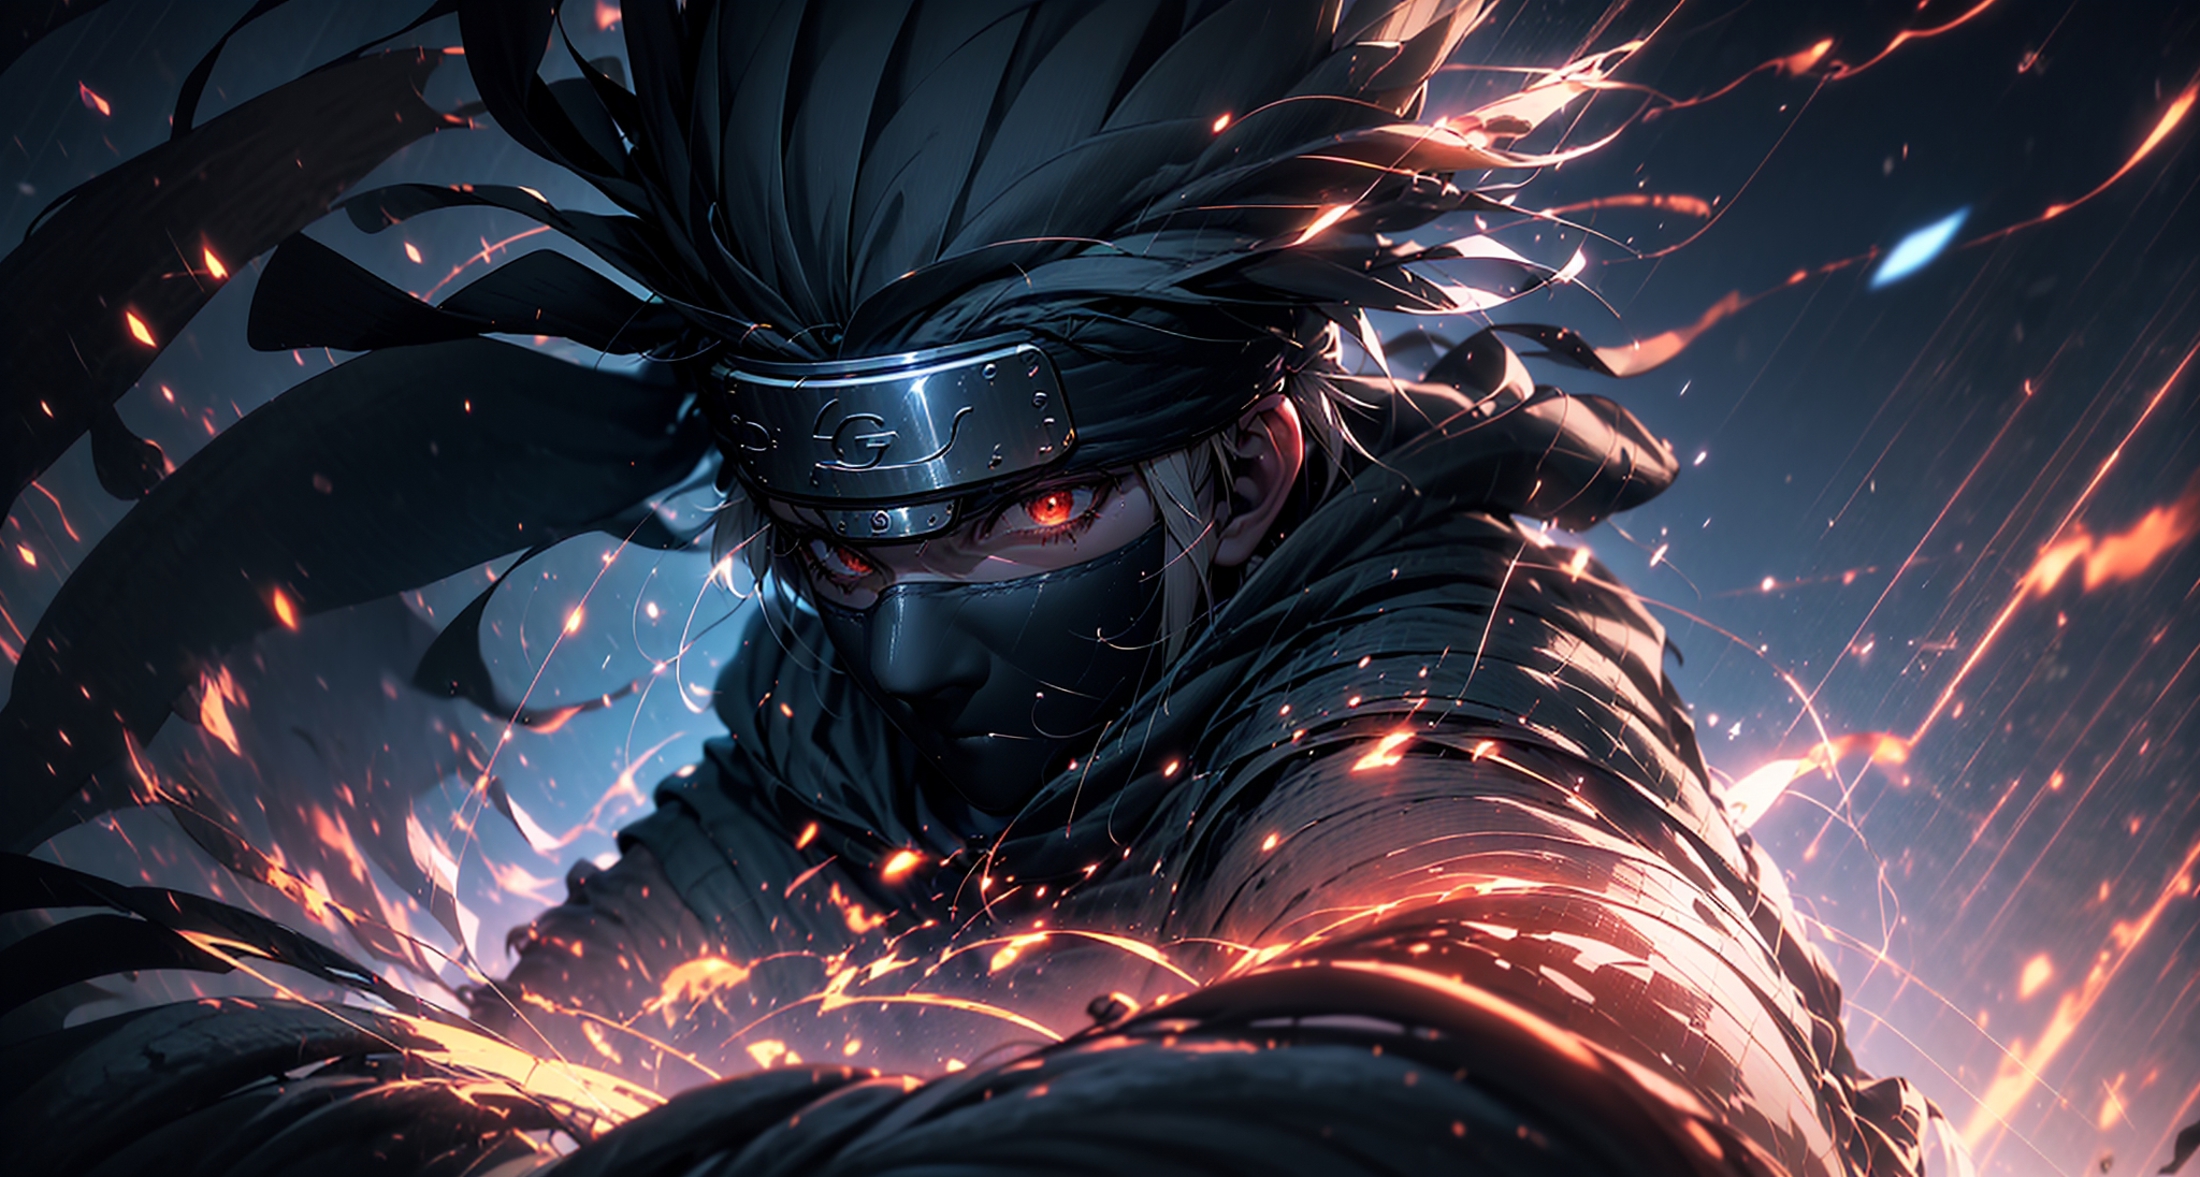 Kakashi Hatake in Naruto image by XRYCJ